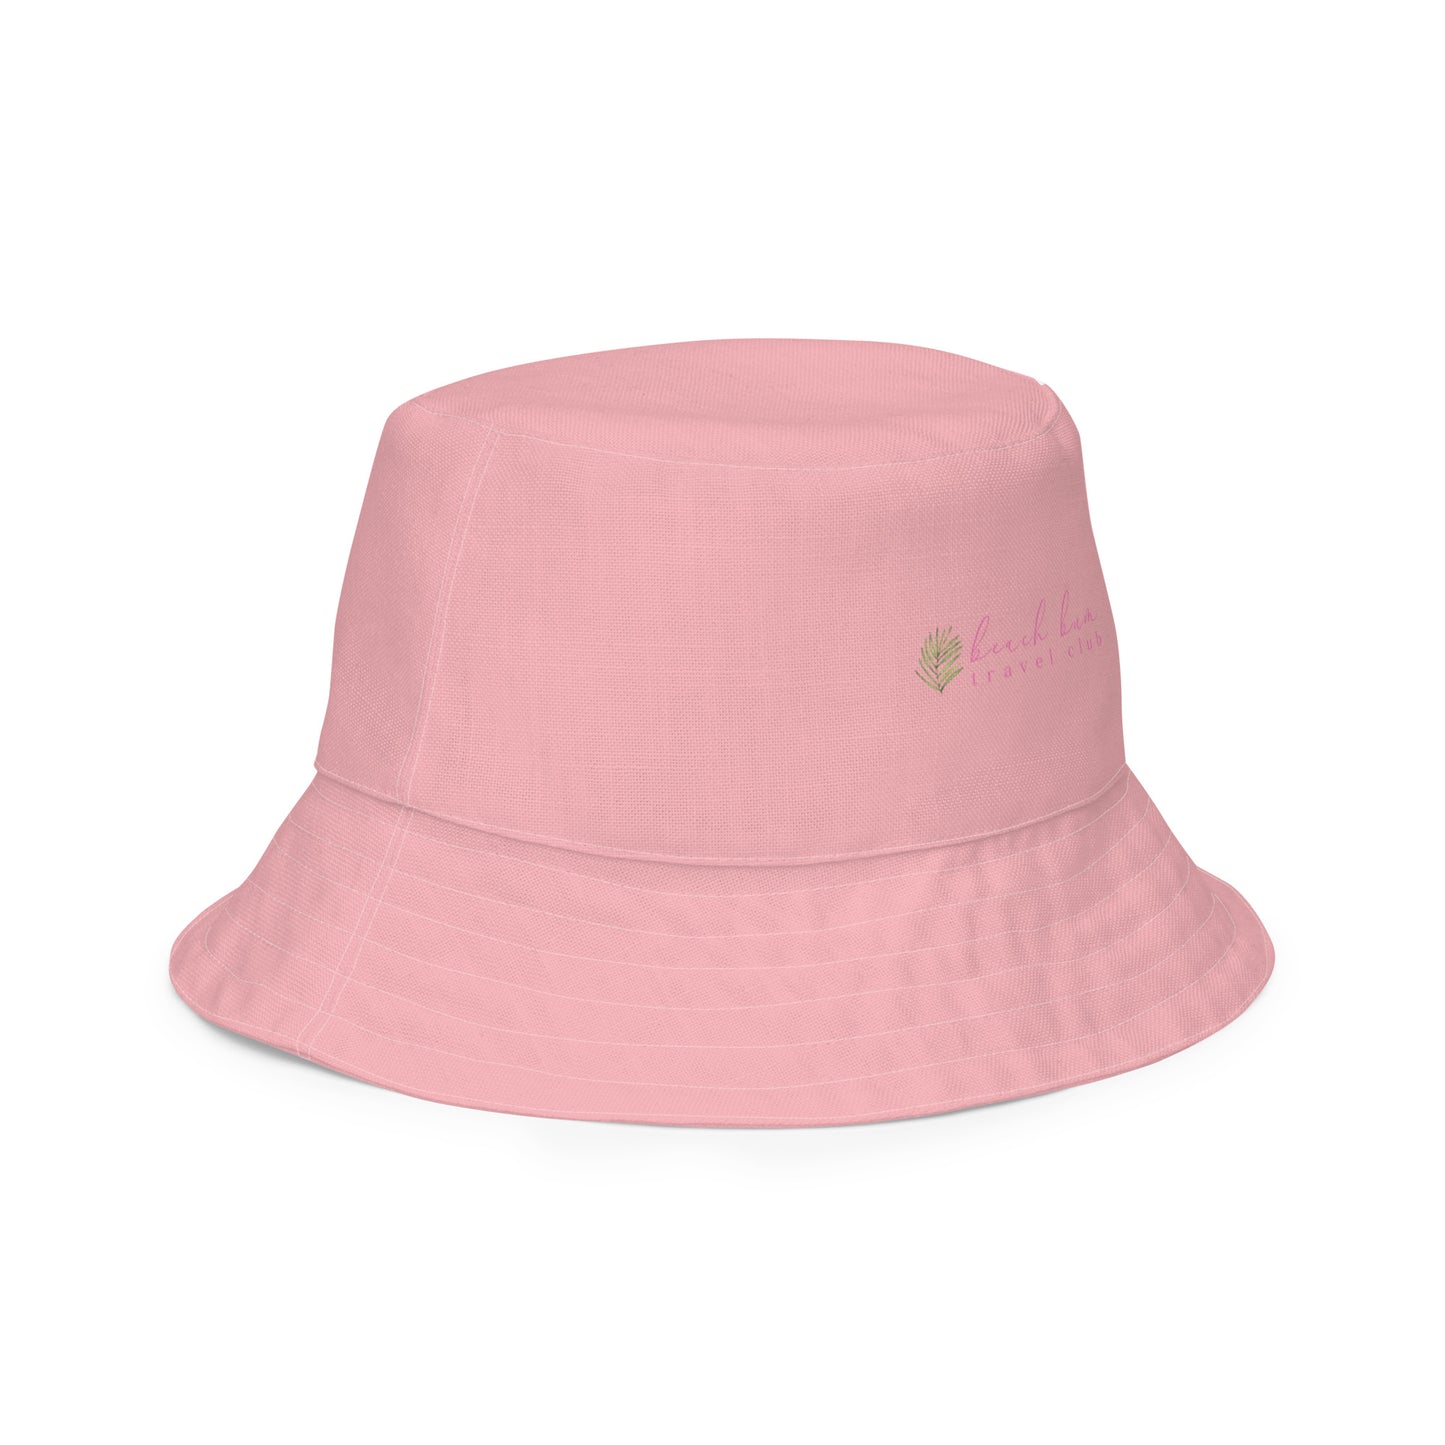 Tropical Vibes Reversible Bucket Hat